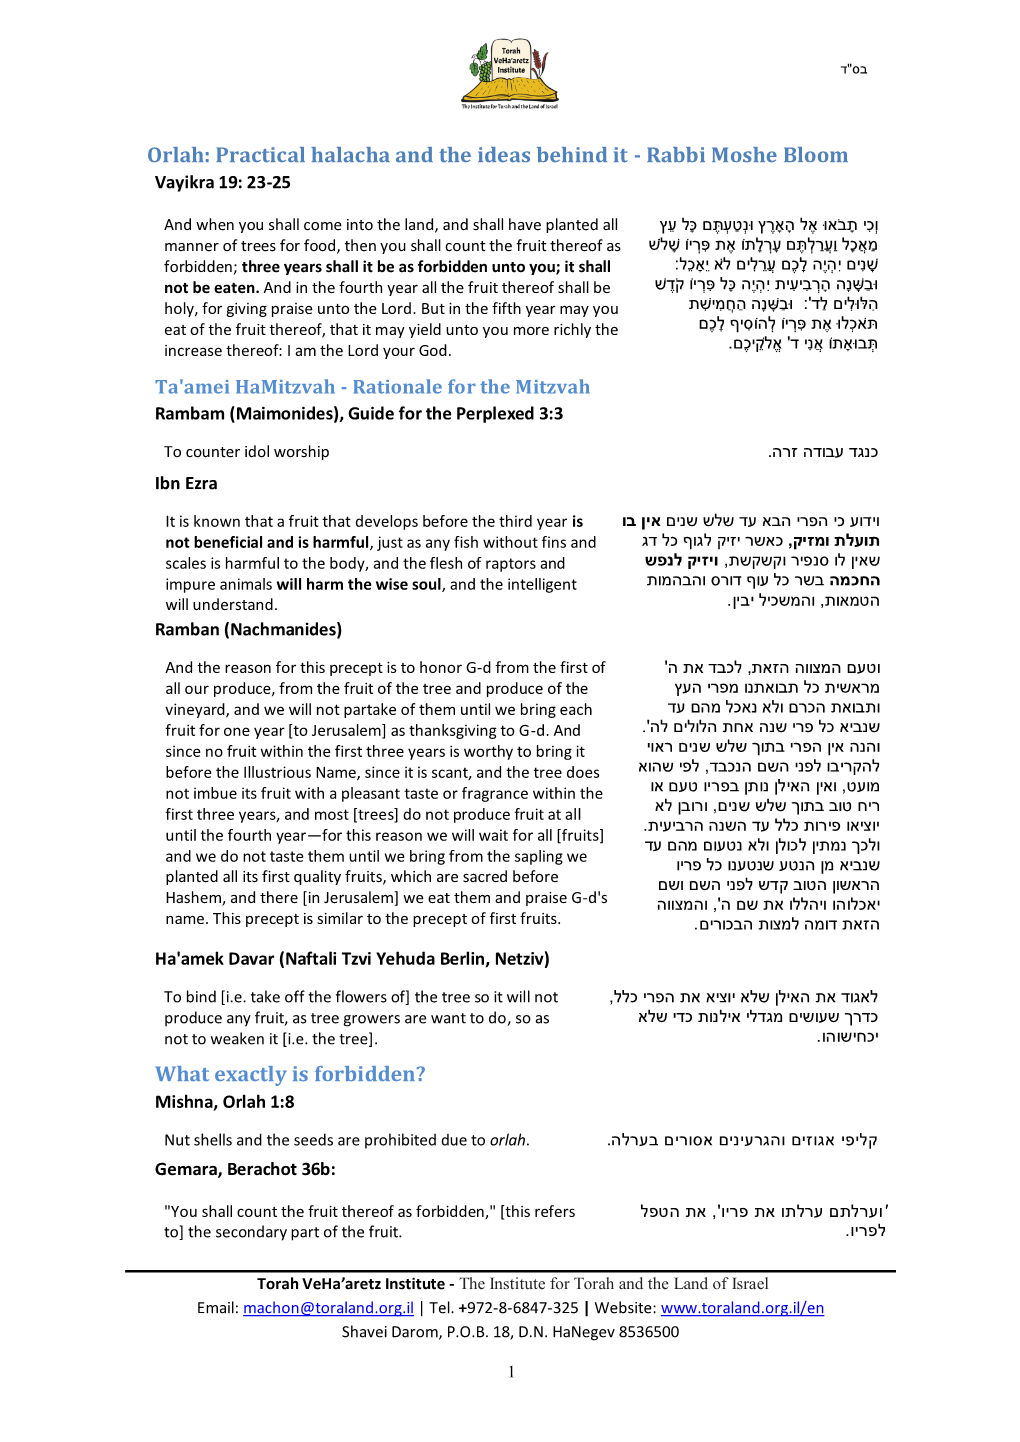 Orlah: Practical Halacha and the Ideas Behind It - Rabbi Moshe Bloom Vayikra 19: 23-25